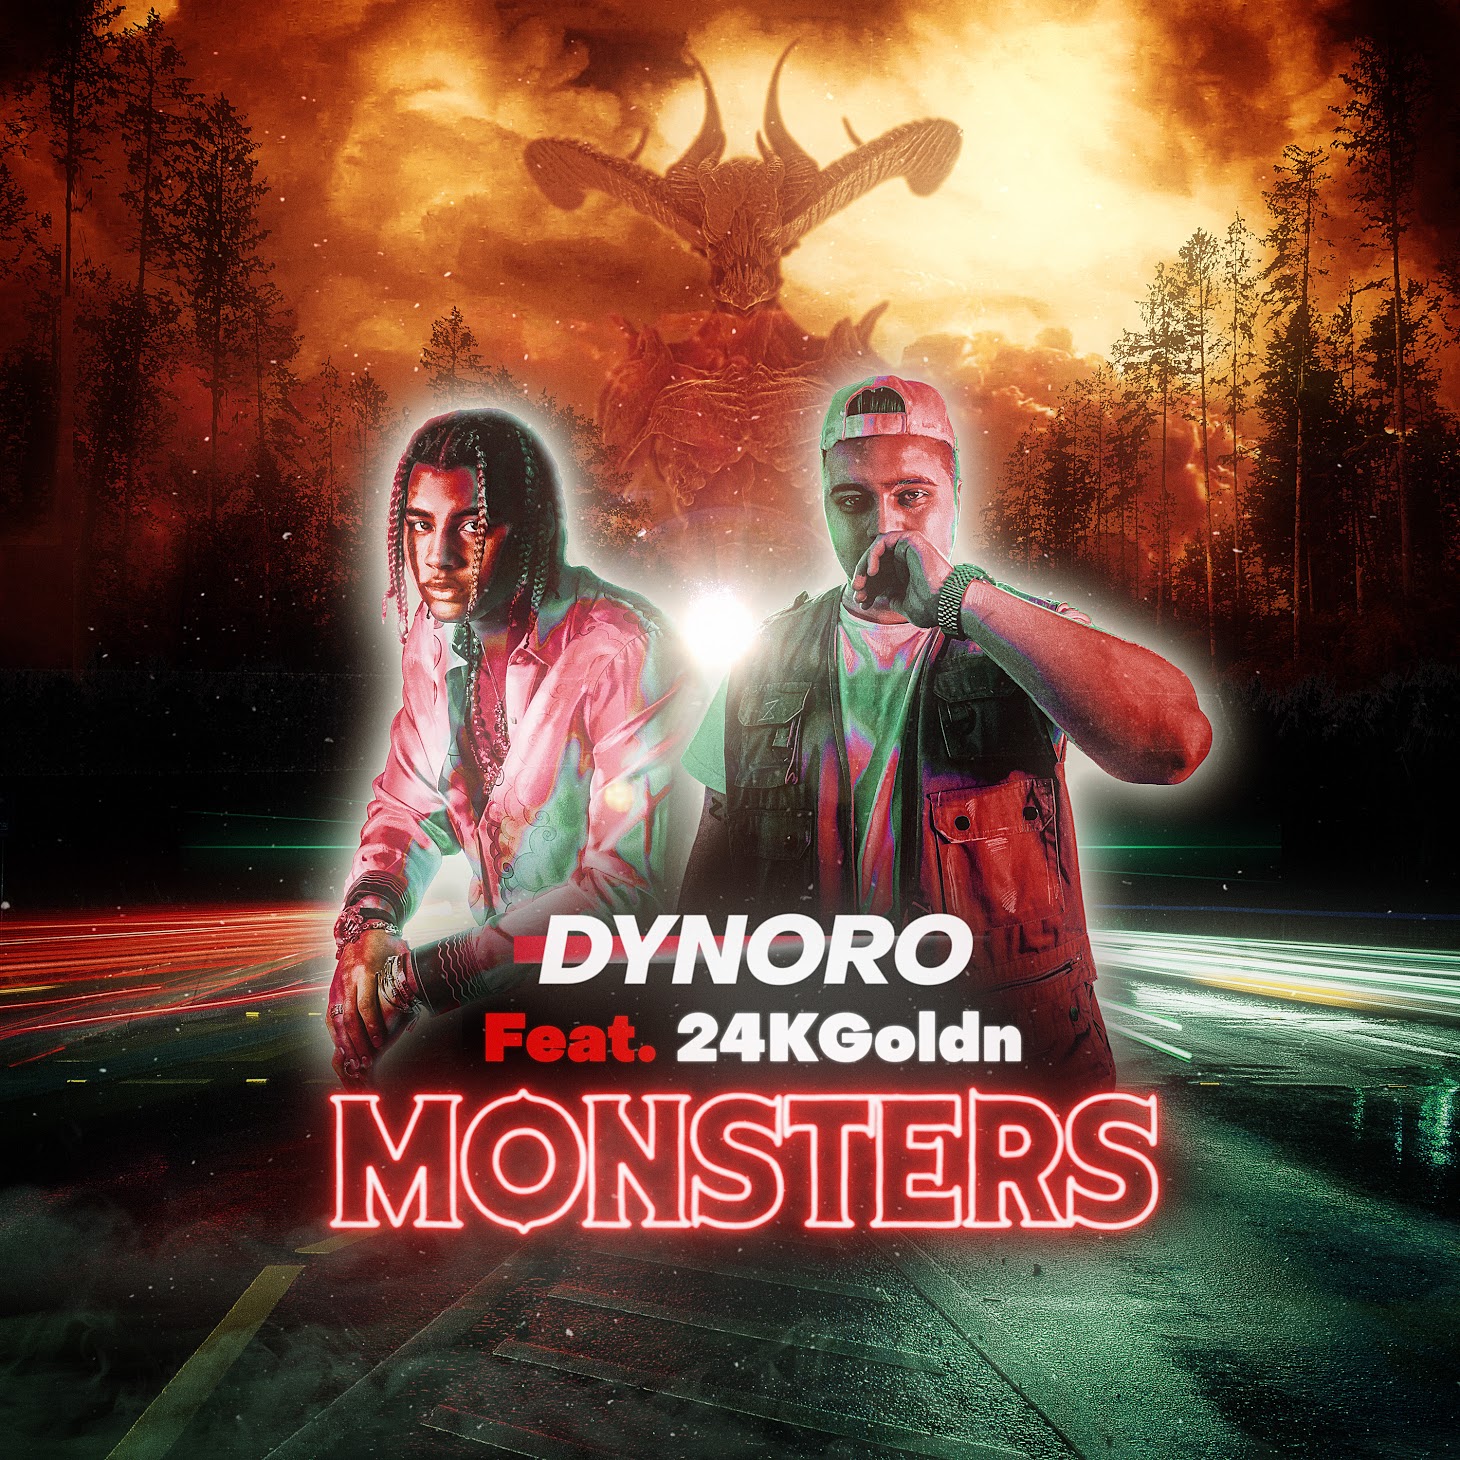 Dynoro feat. 2kGoldn - "Monsters" single artwork